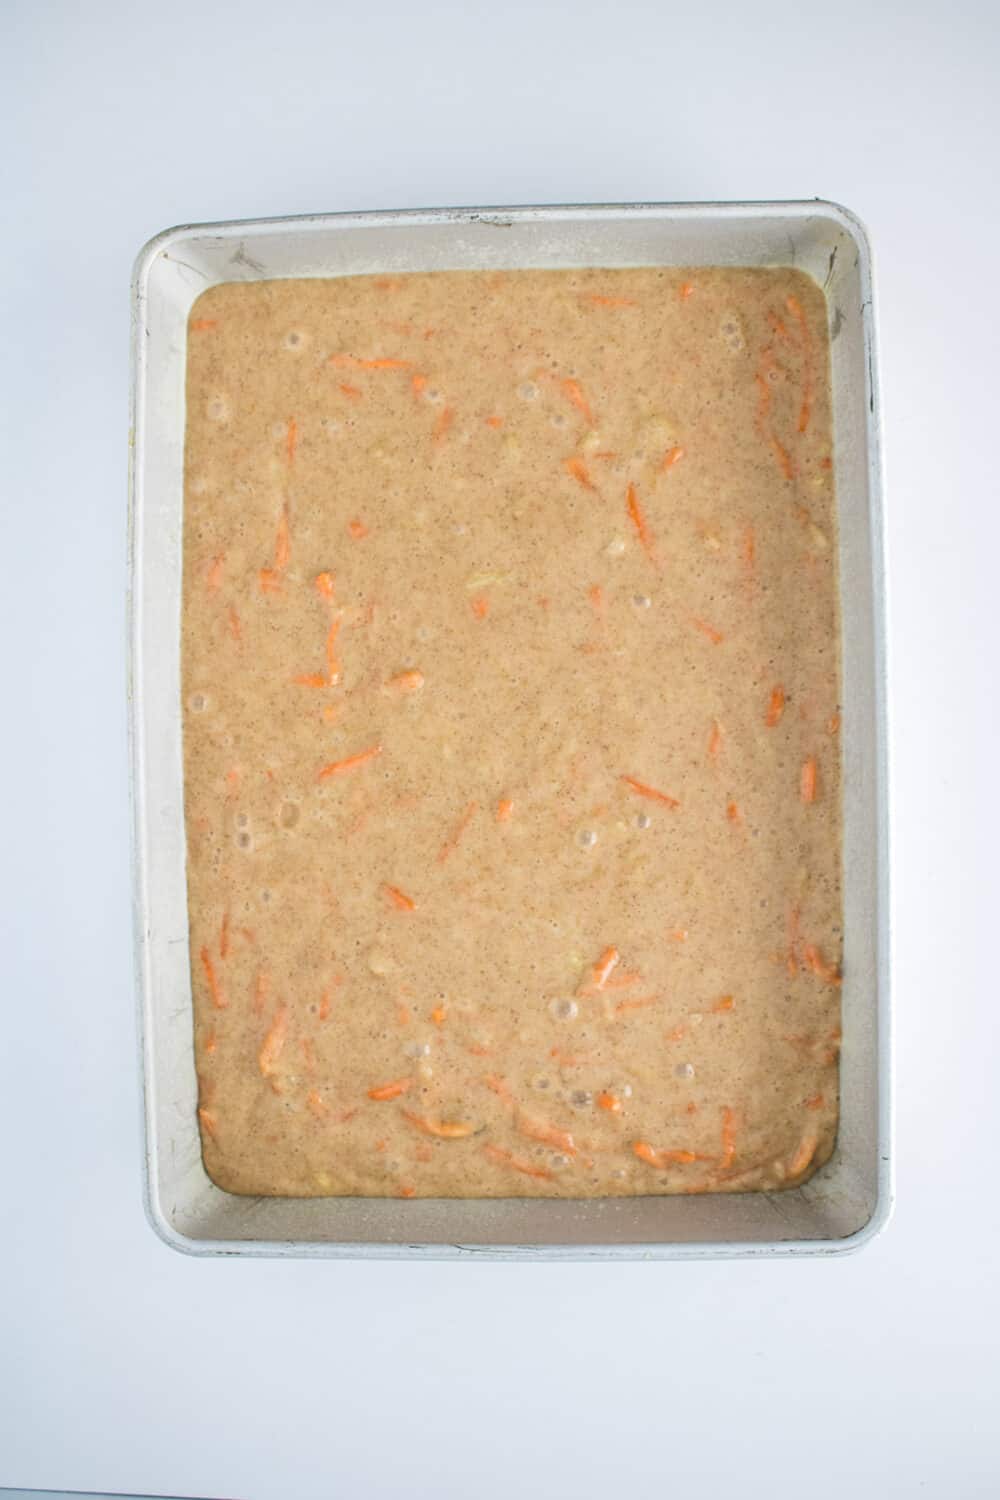 Carrot cake batter in an 11 x 13 pan, ready to bake